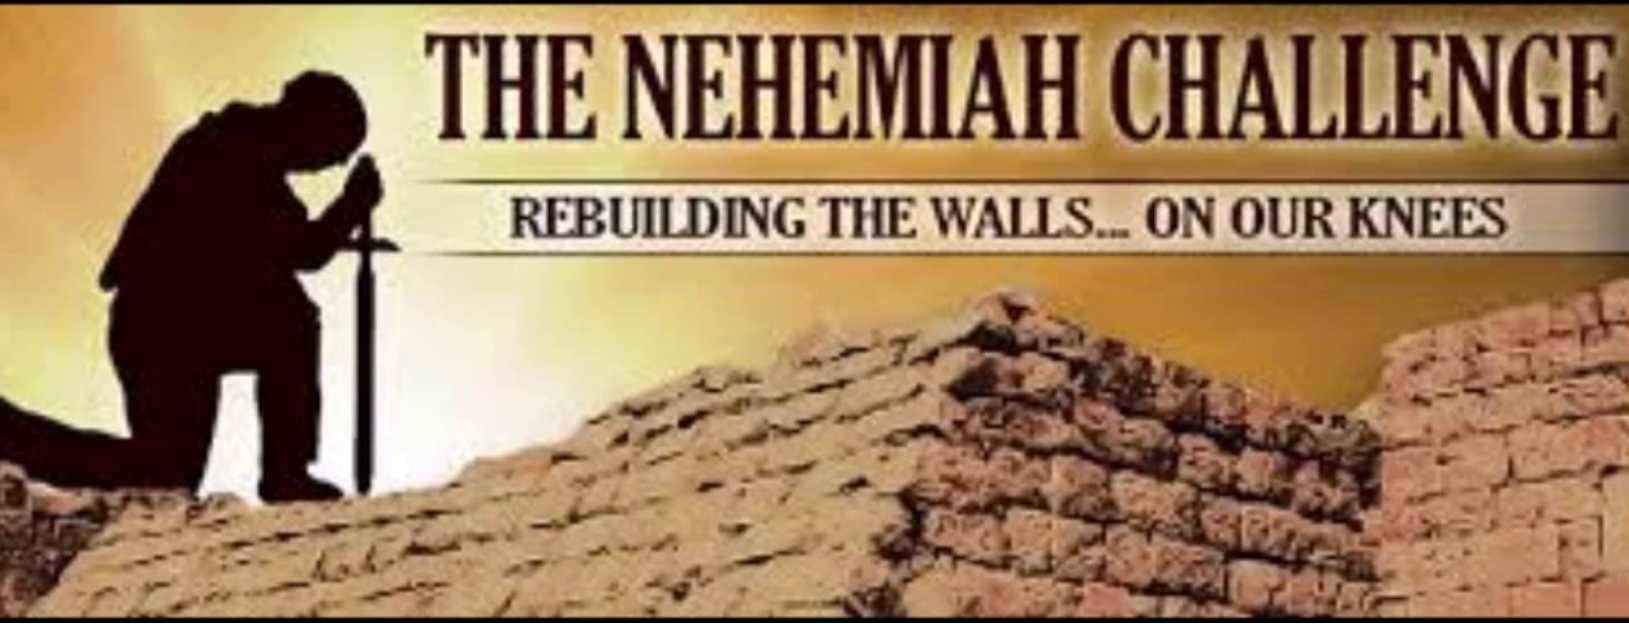 Rebuilding the Wall - Nehemiah